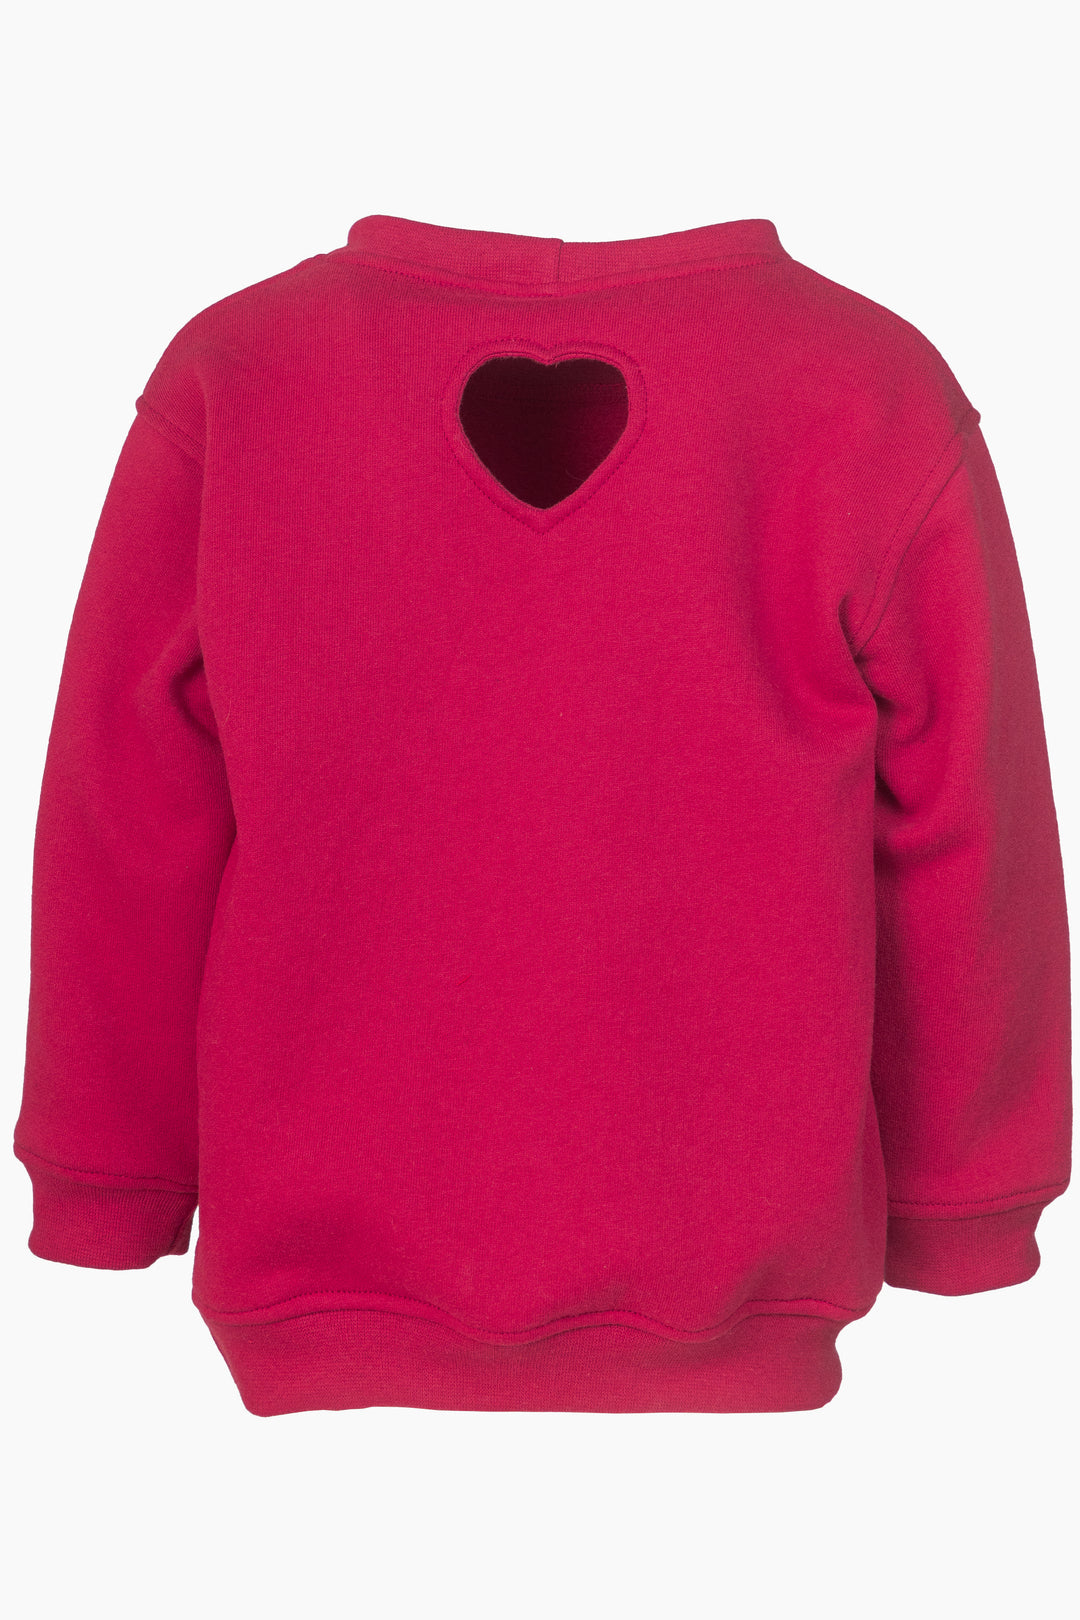 Fleece crewneck sweater with heart back [Heart]  [Baby]